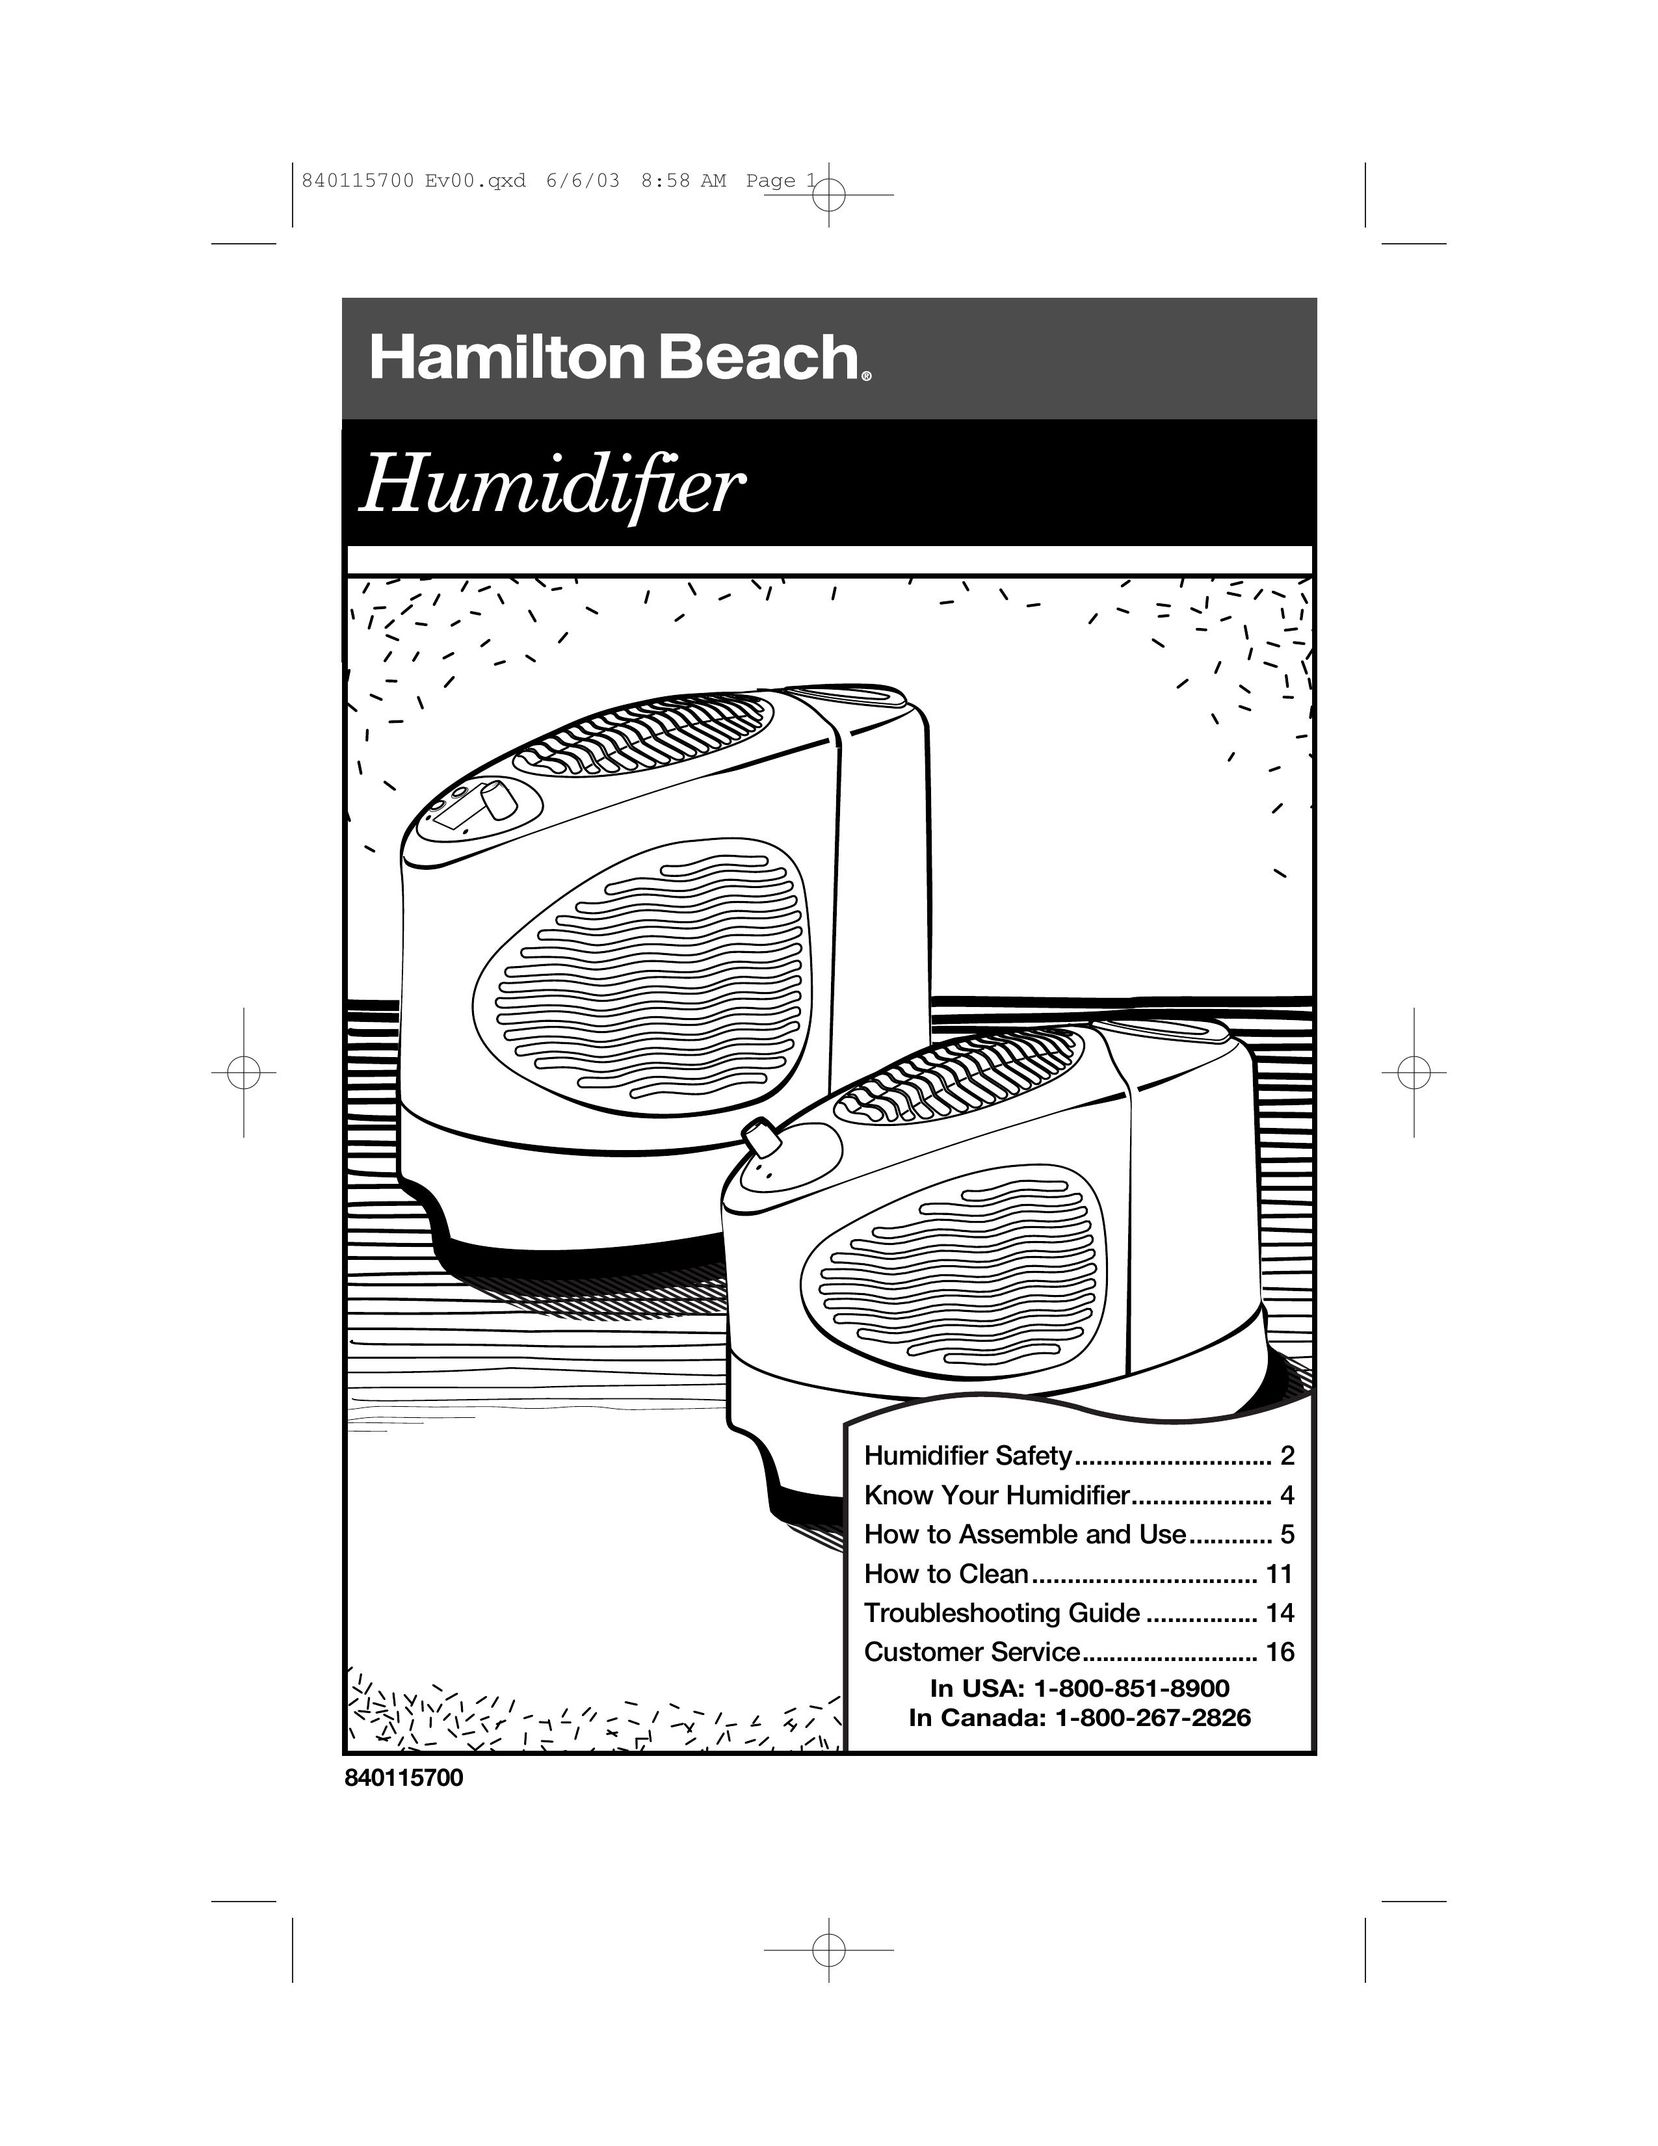 Hamilton Beach 05519 Humidifier User Manual